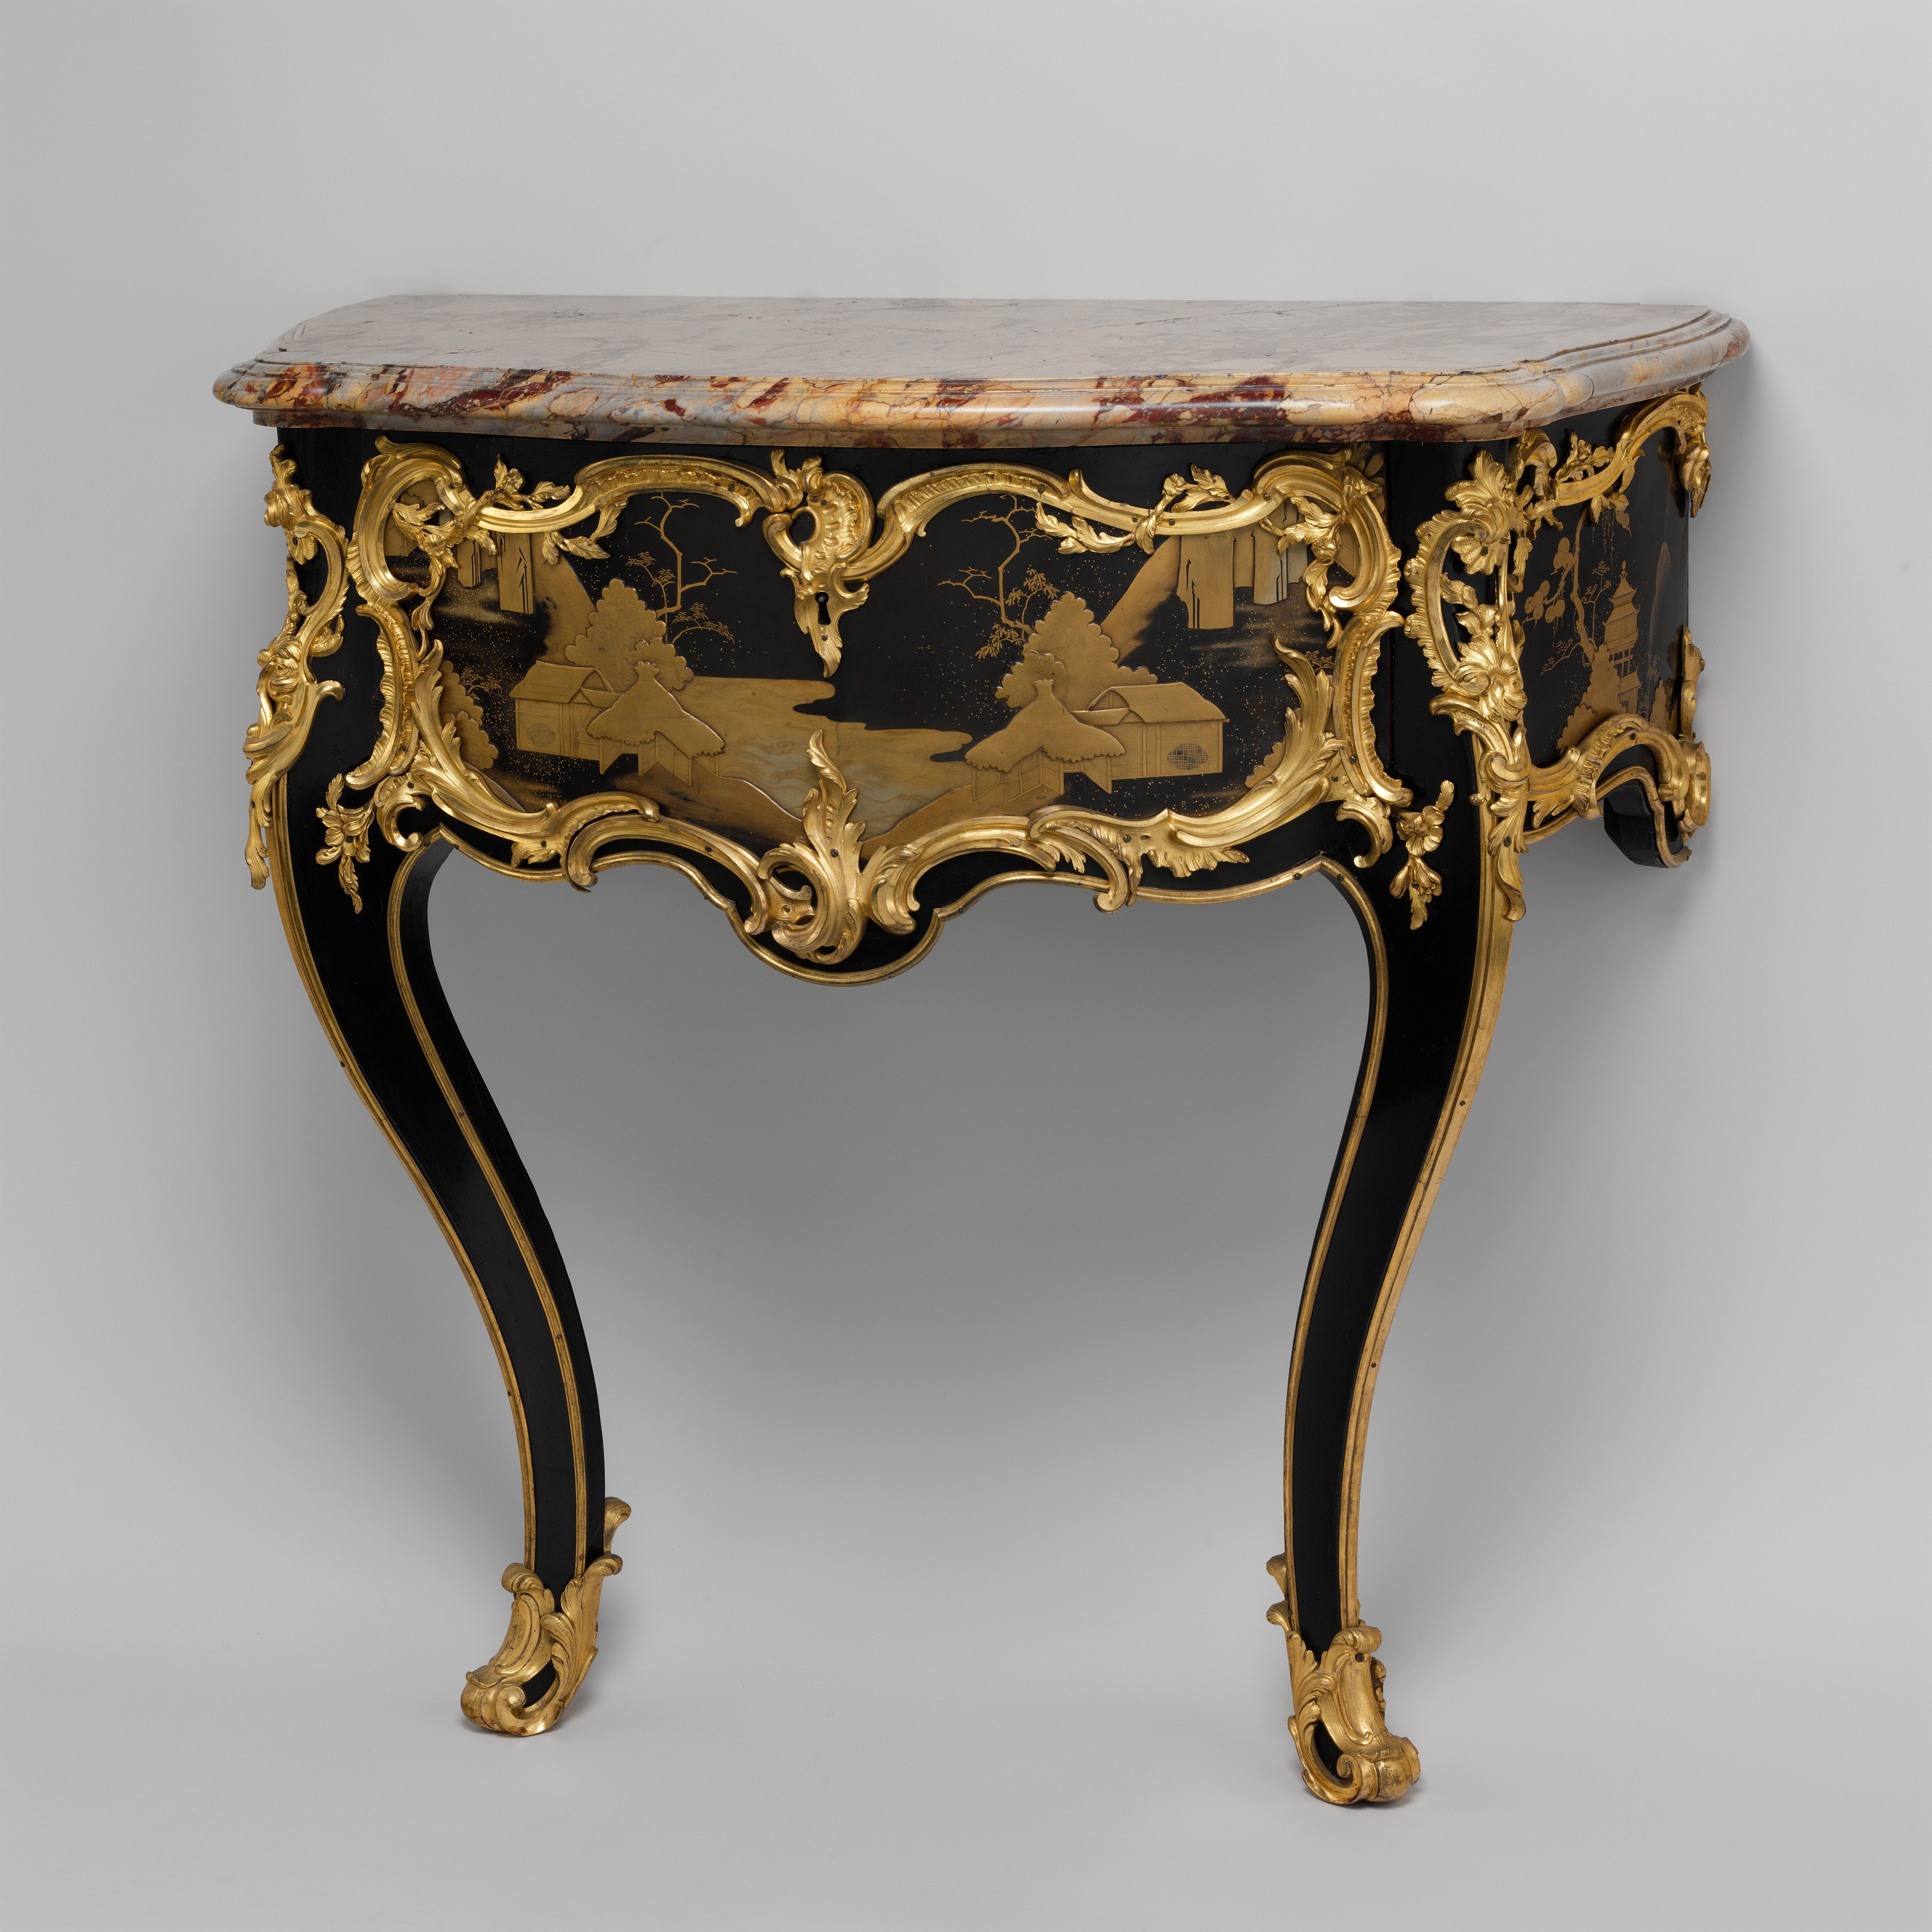 Bernard II van Paris | table Side | The | French, Metropolitan en Art (commode console) Risenburgh Museum of